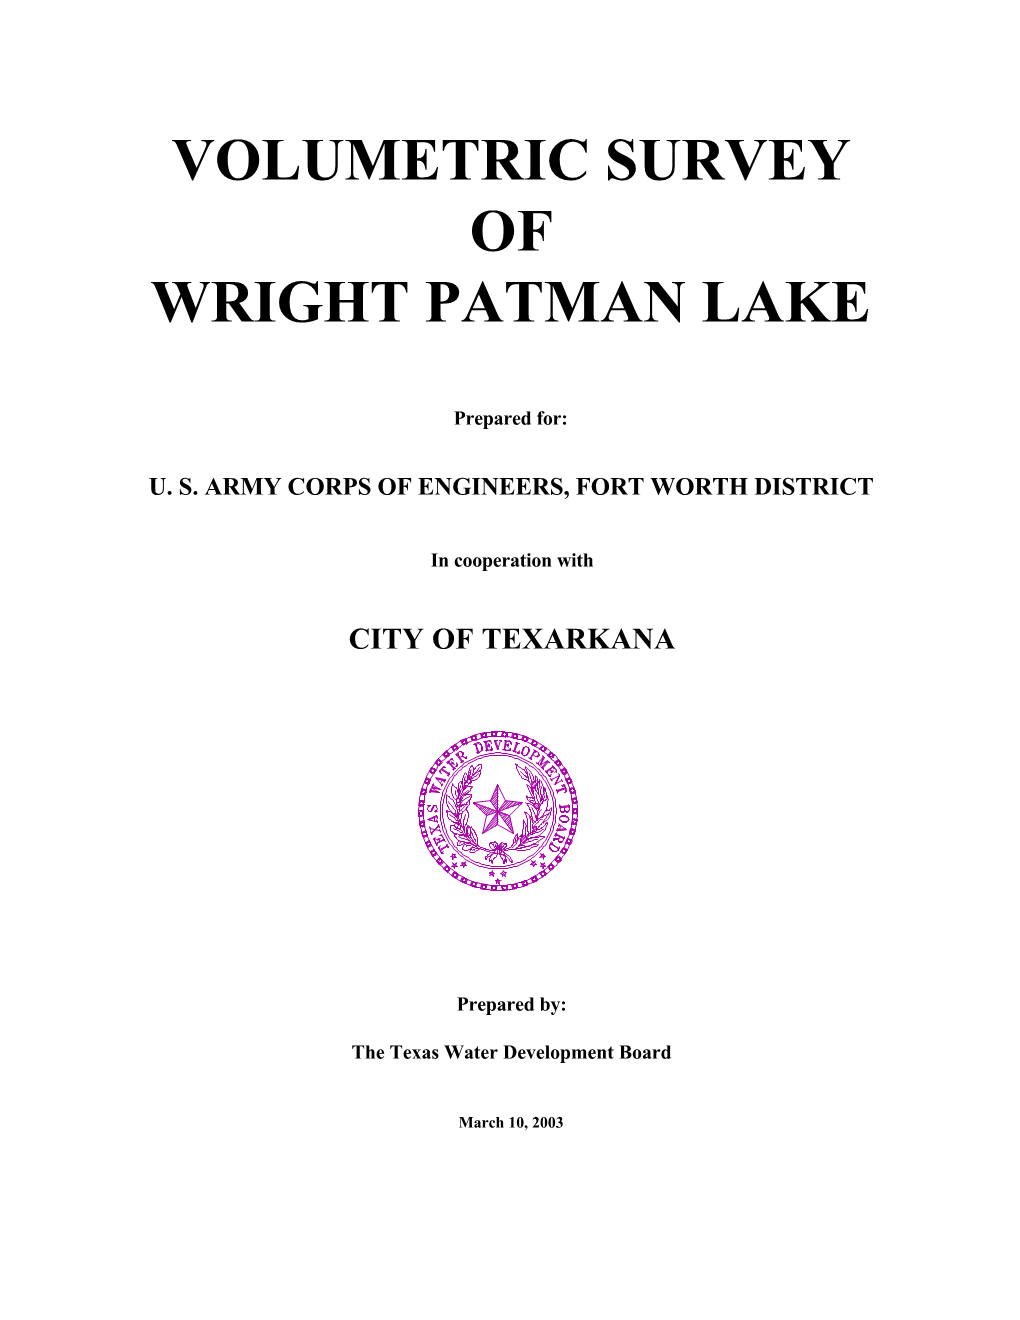 Volumetric Survey of Wright Patman Lake